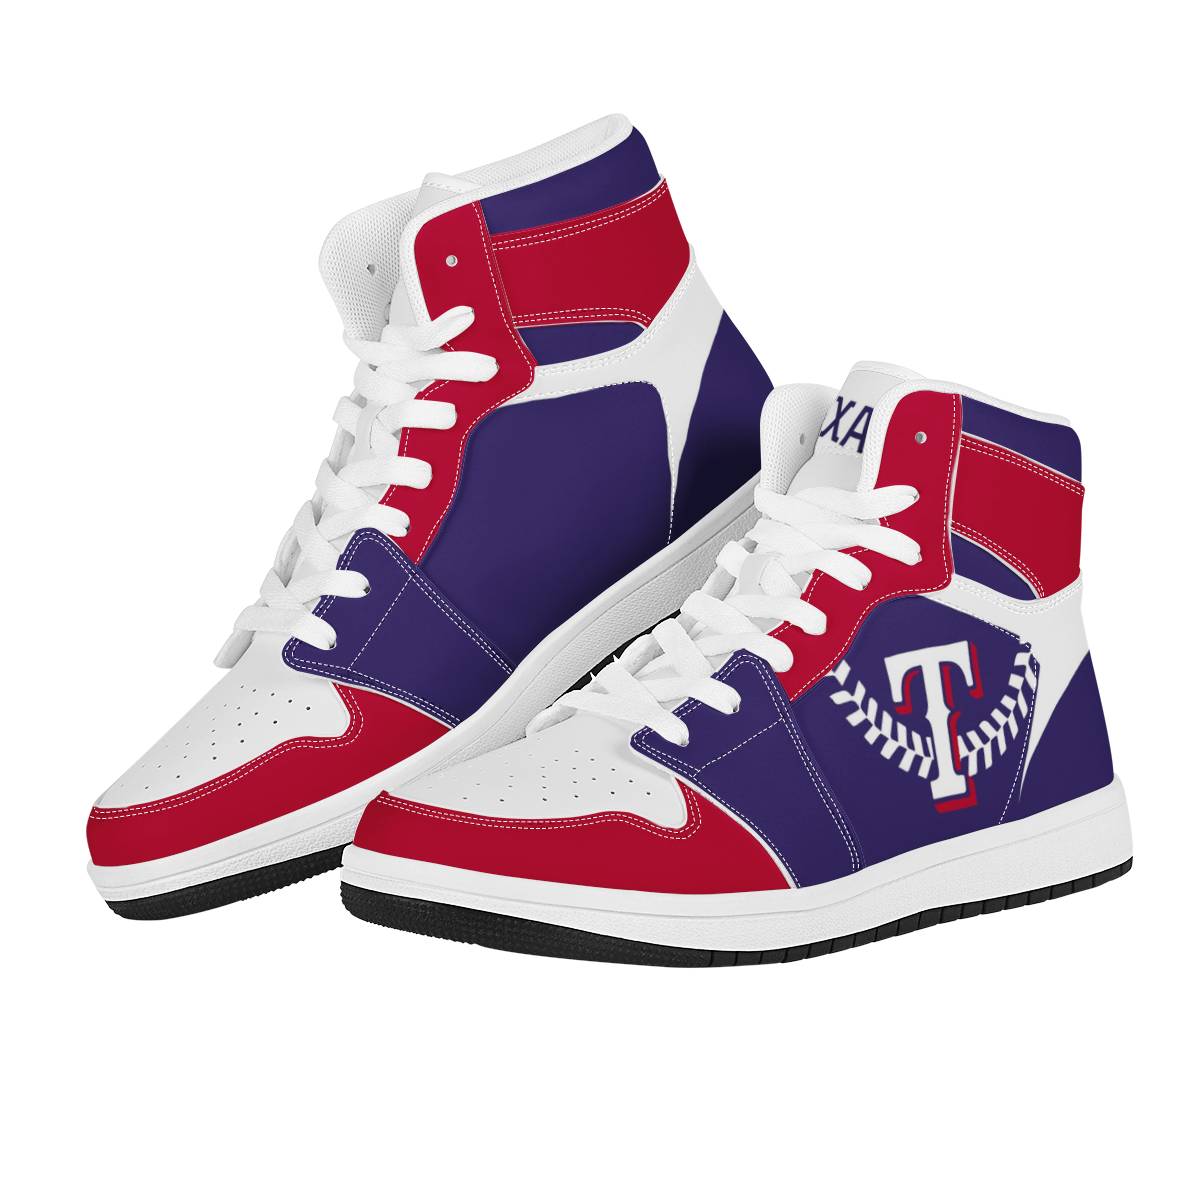 Men's Texas Rangers High Top Leather AJ1 Sneakers 001